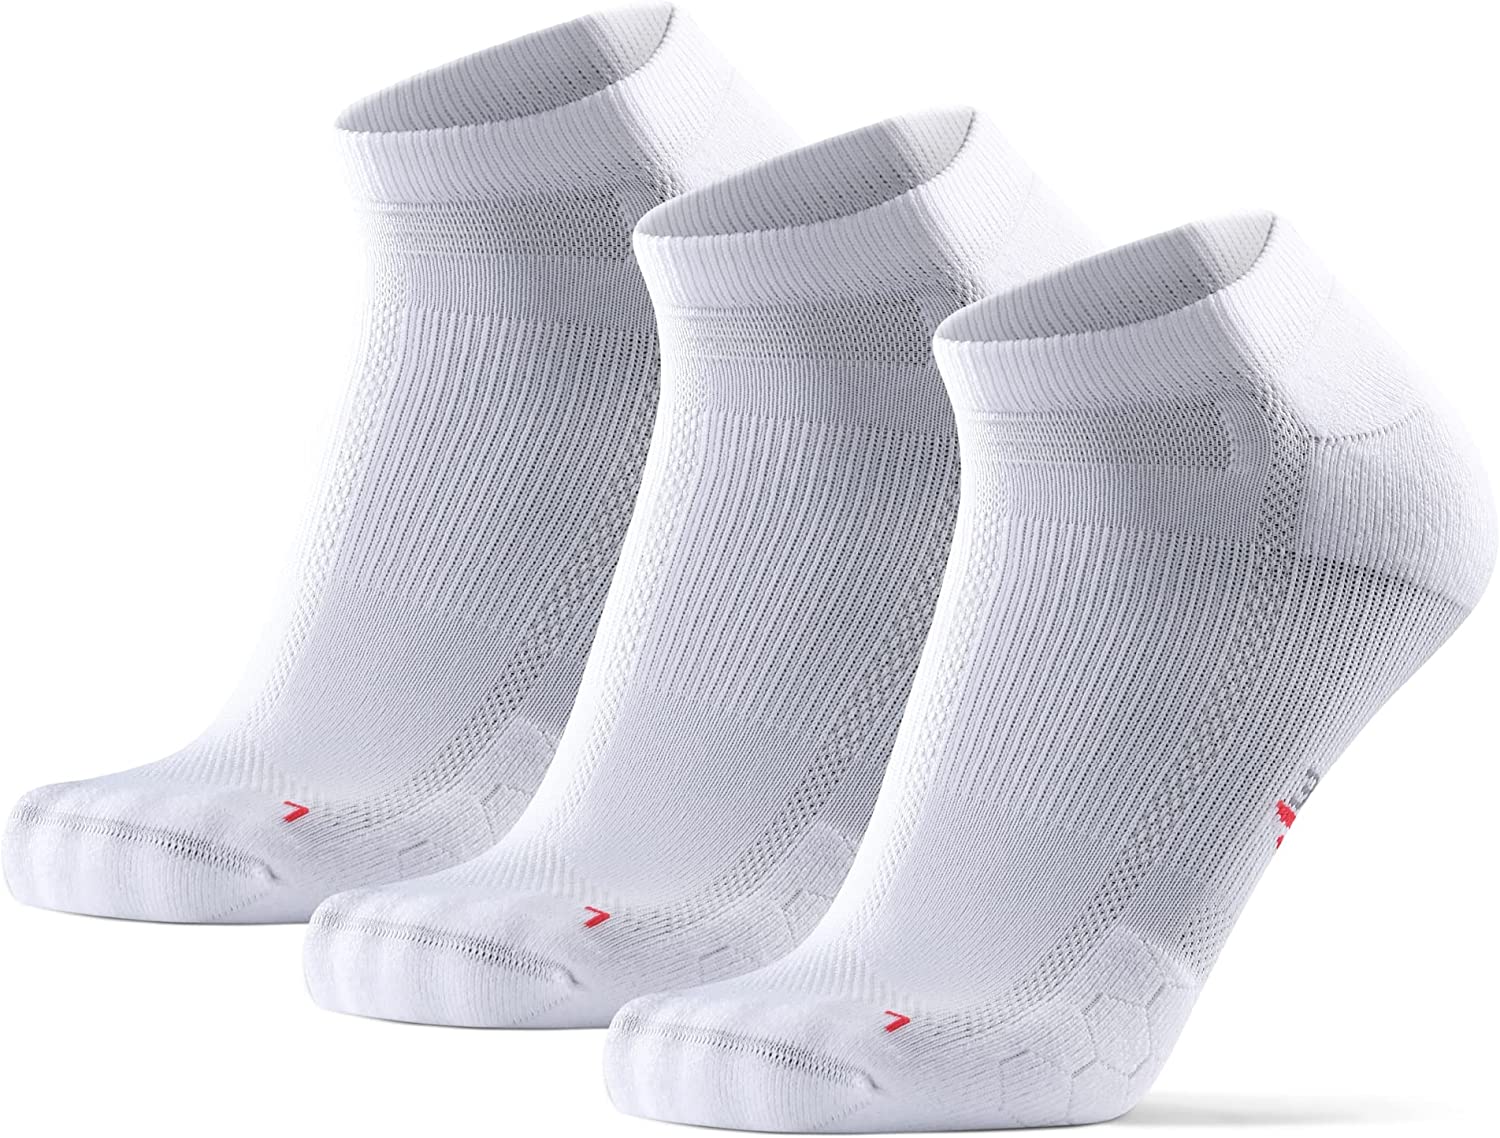 DANISH ENDURANCE 3 Pack Cycling Socks, Low-Cut, Breathable for Men & Women